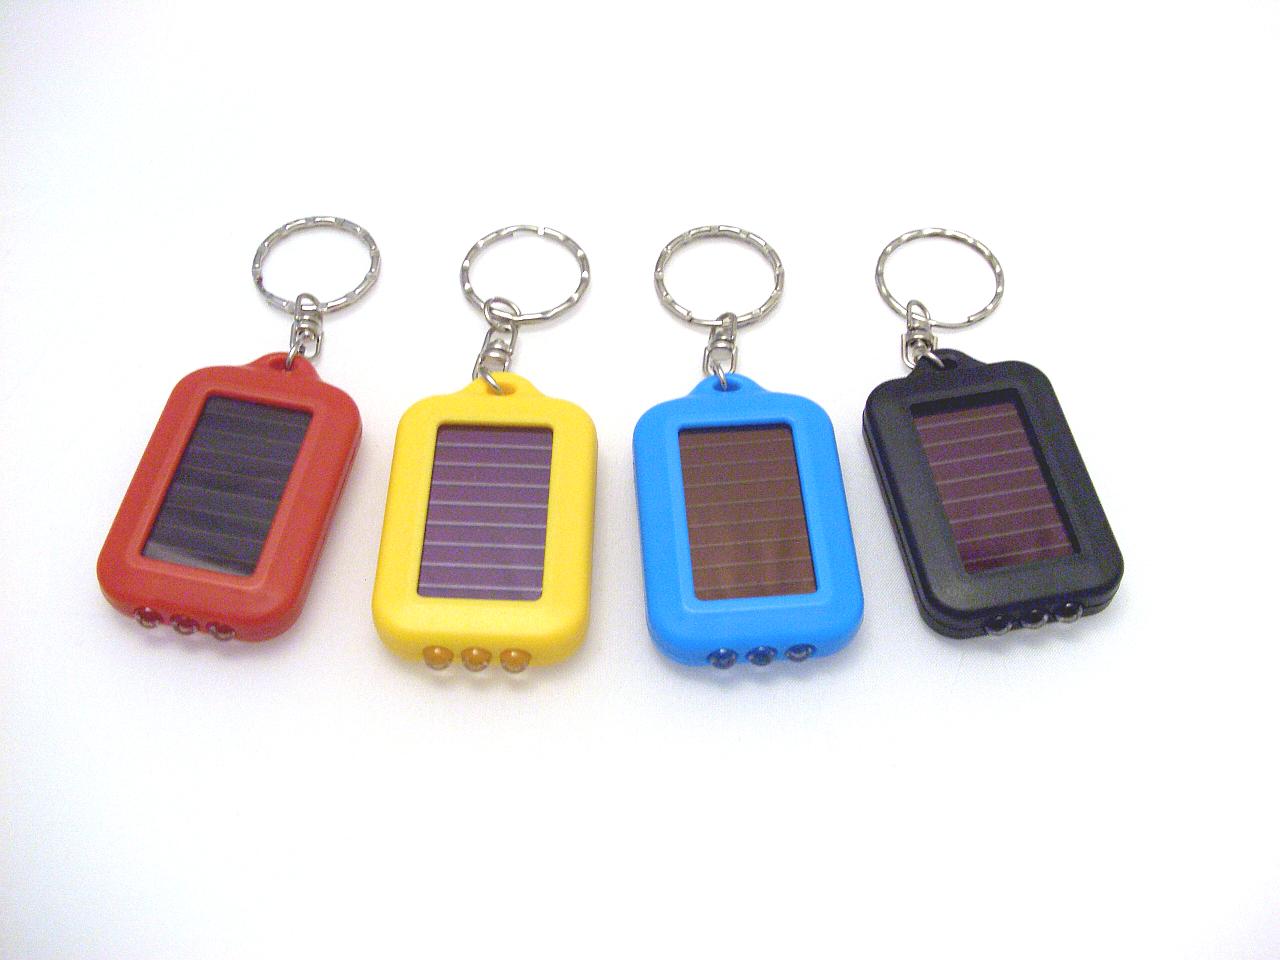 DSstyles Solar Energy Powered LED Flashlight Torch Keychain Yellow Portable